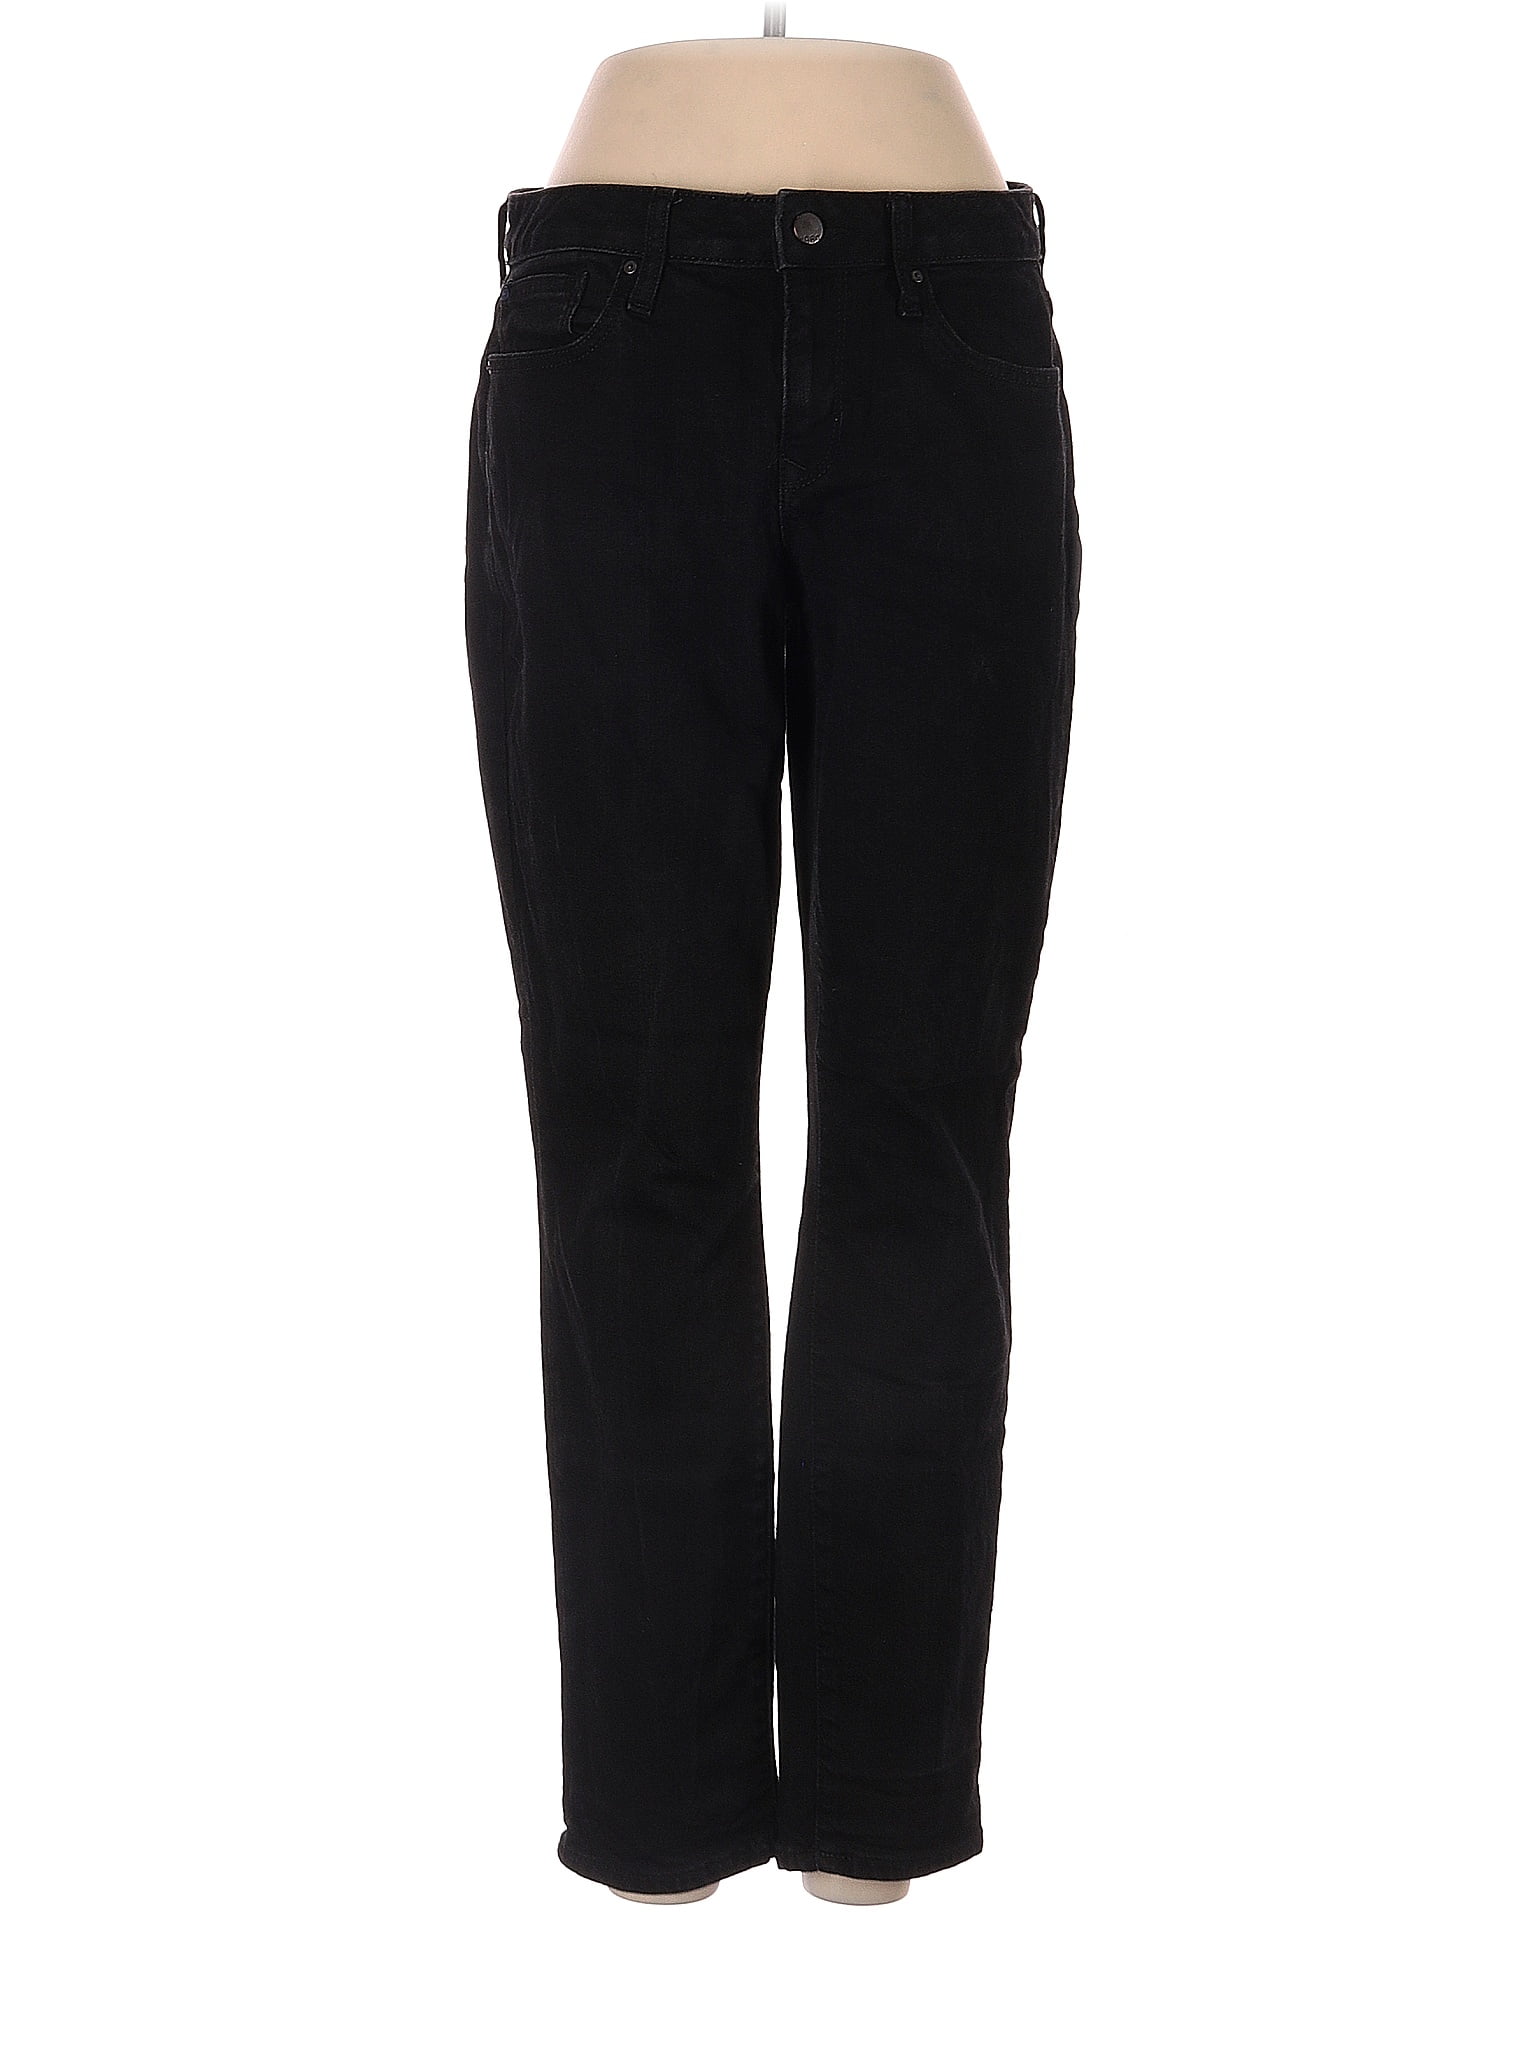 Gap Solid Black Jeans 29 Waist (Petite) - 78% off | thredUP